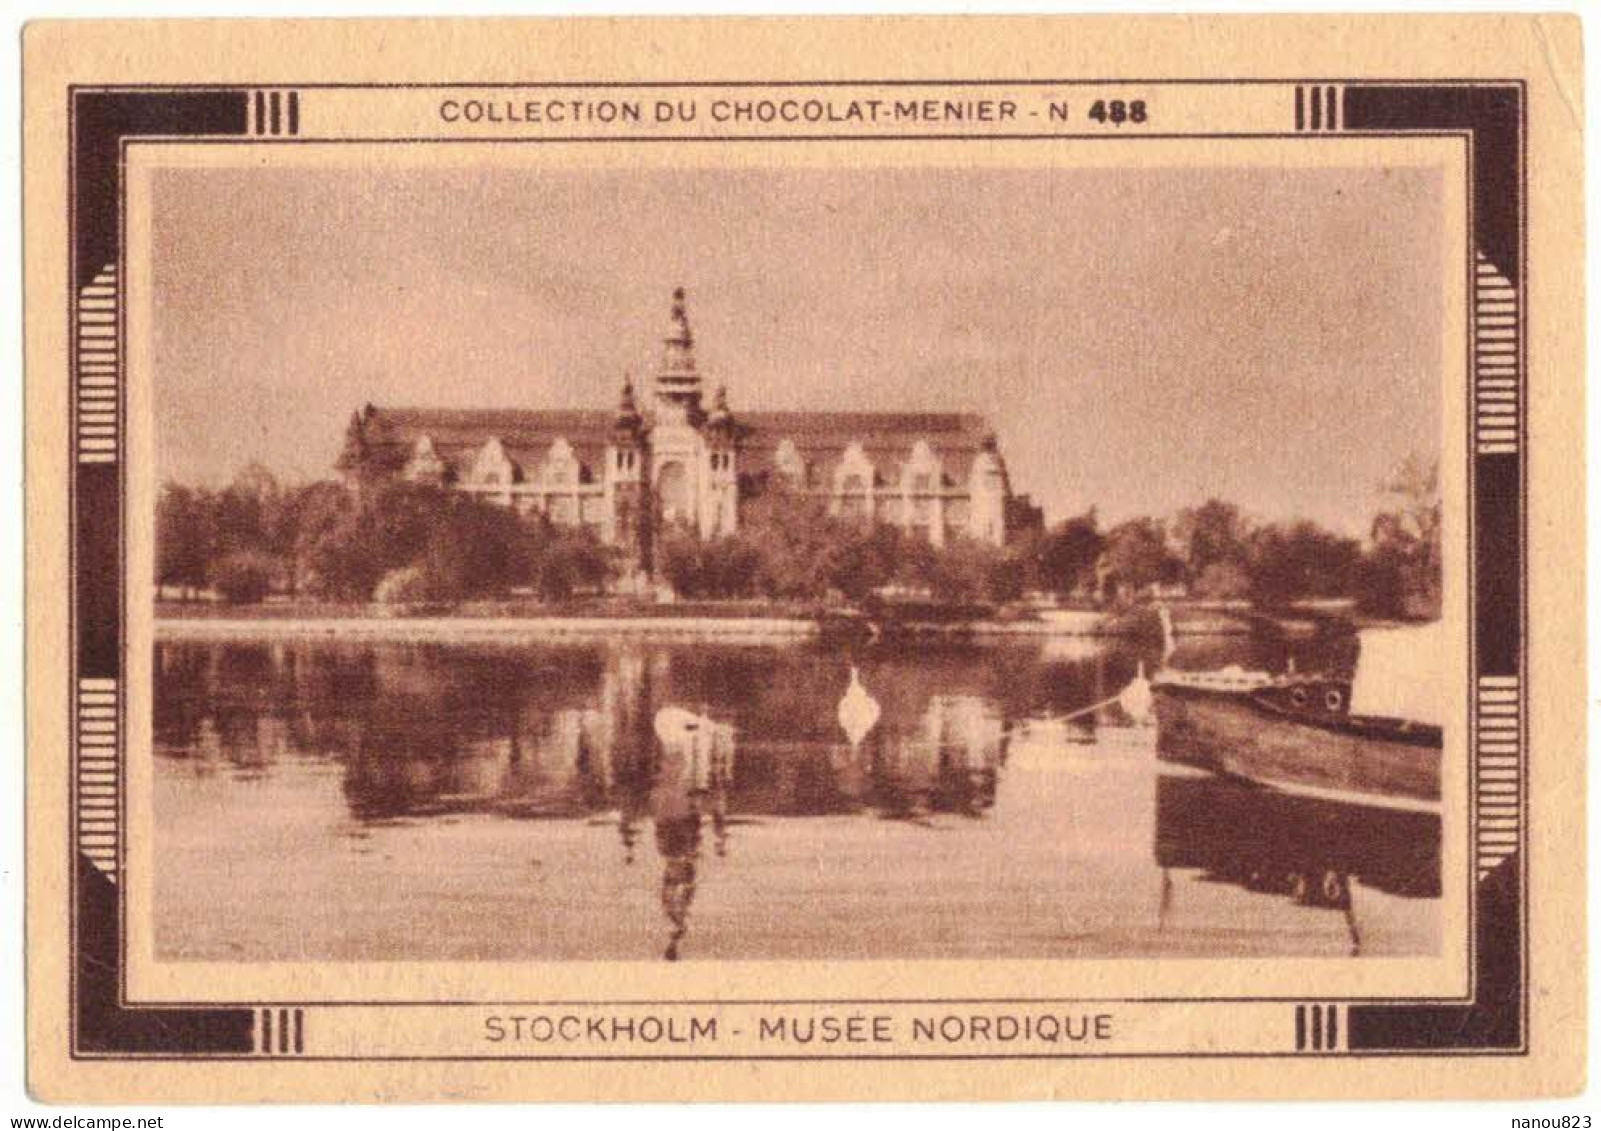 IMAGE CHROMO CHOCOLAT MENIER N° 488 SUEDE STOCKHOLM MUSEE NORDIQUE CULTURE HISTOIRE PEUPLE ISAK GUSTAF CLASON ARCHITECTE - Menier